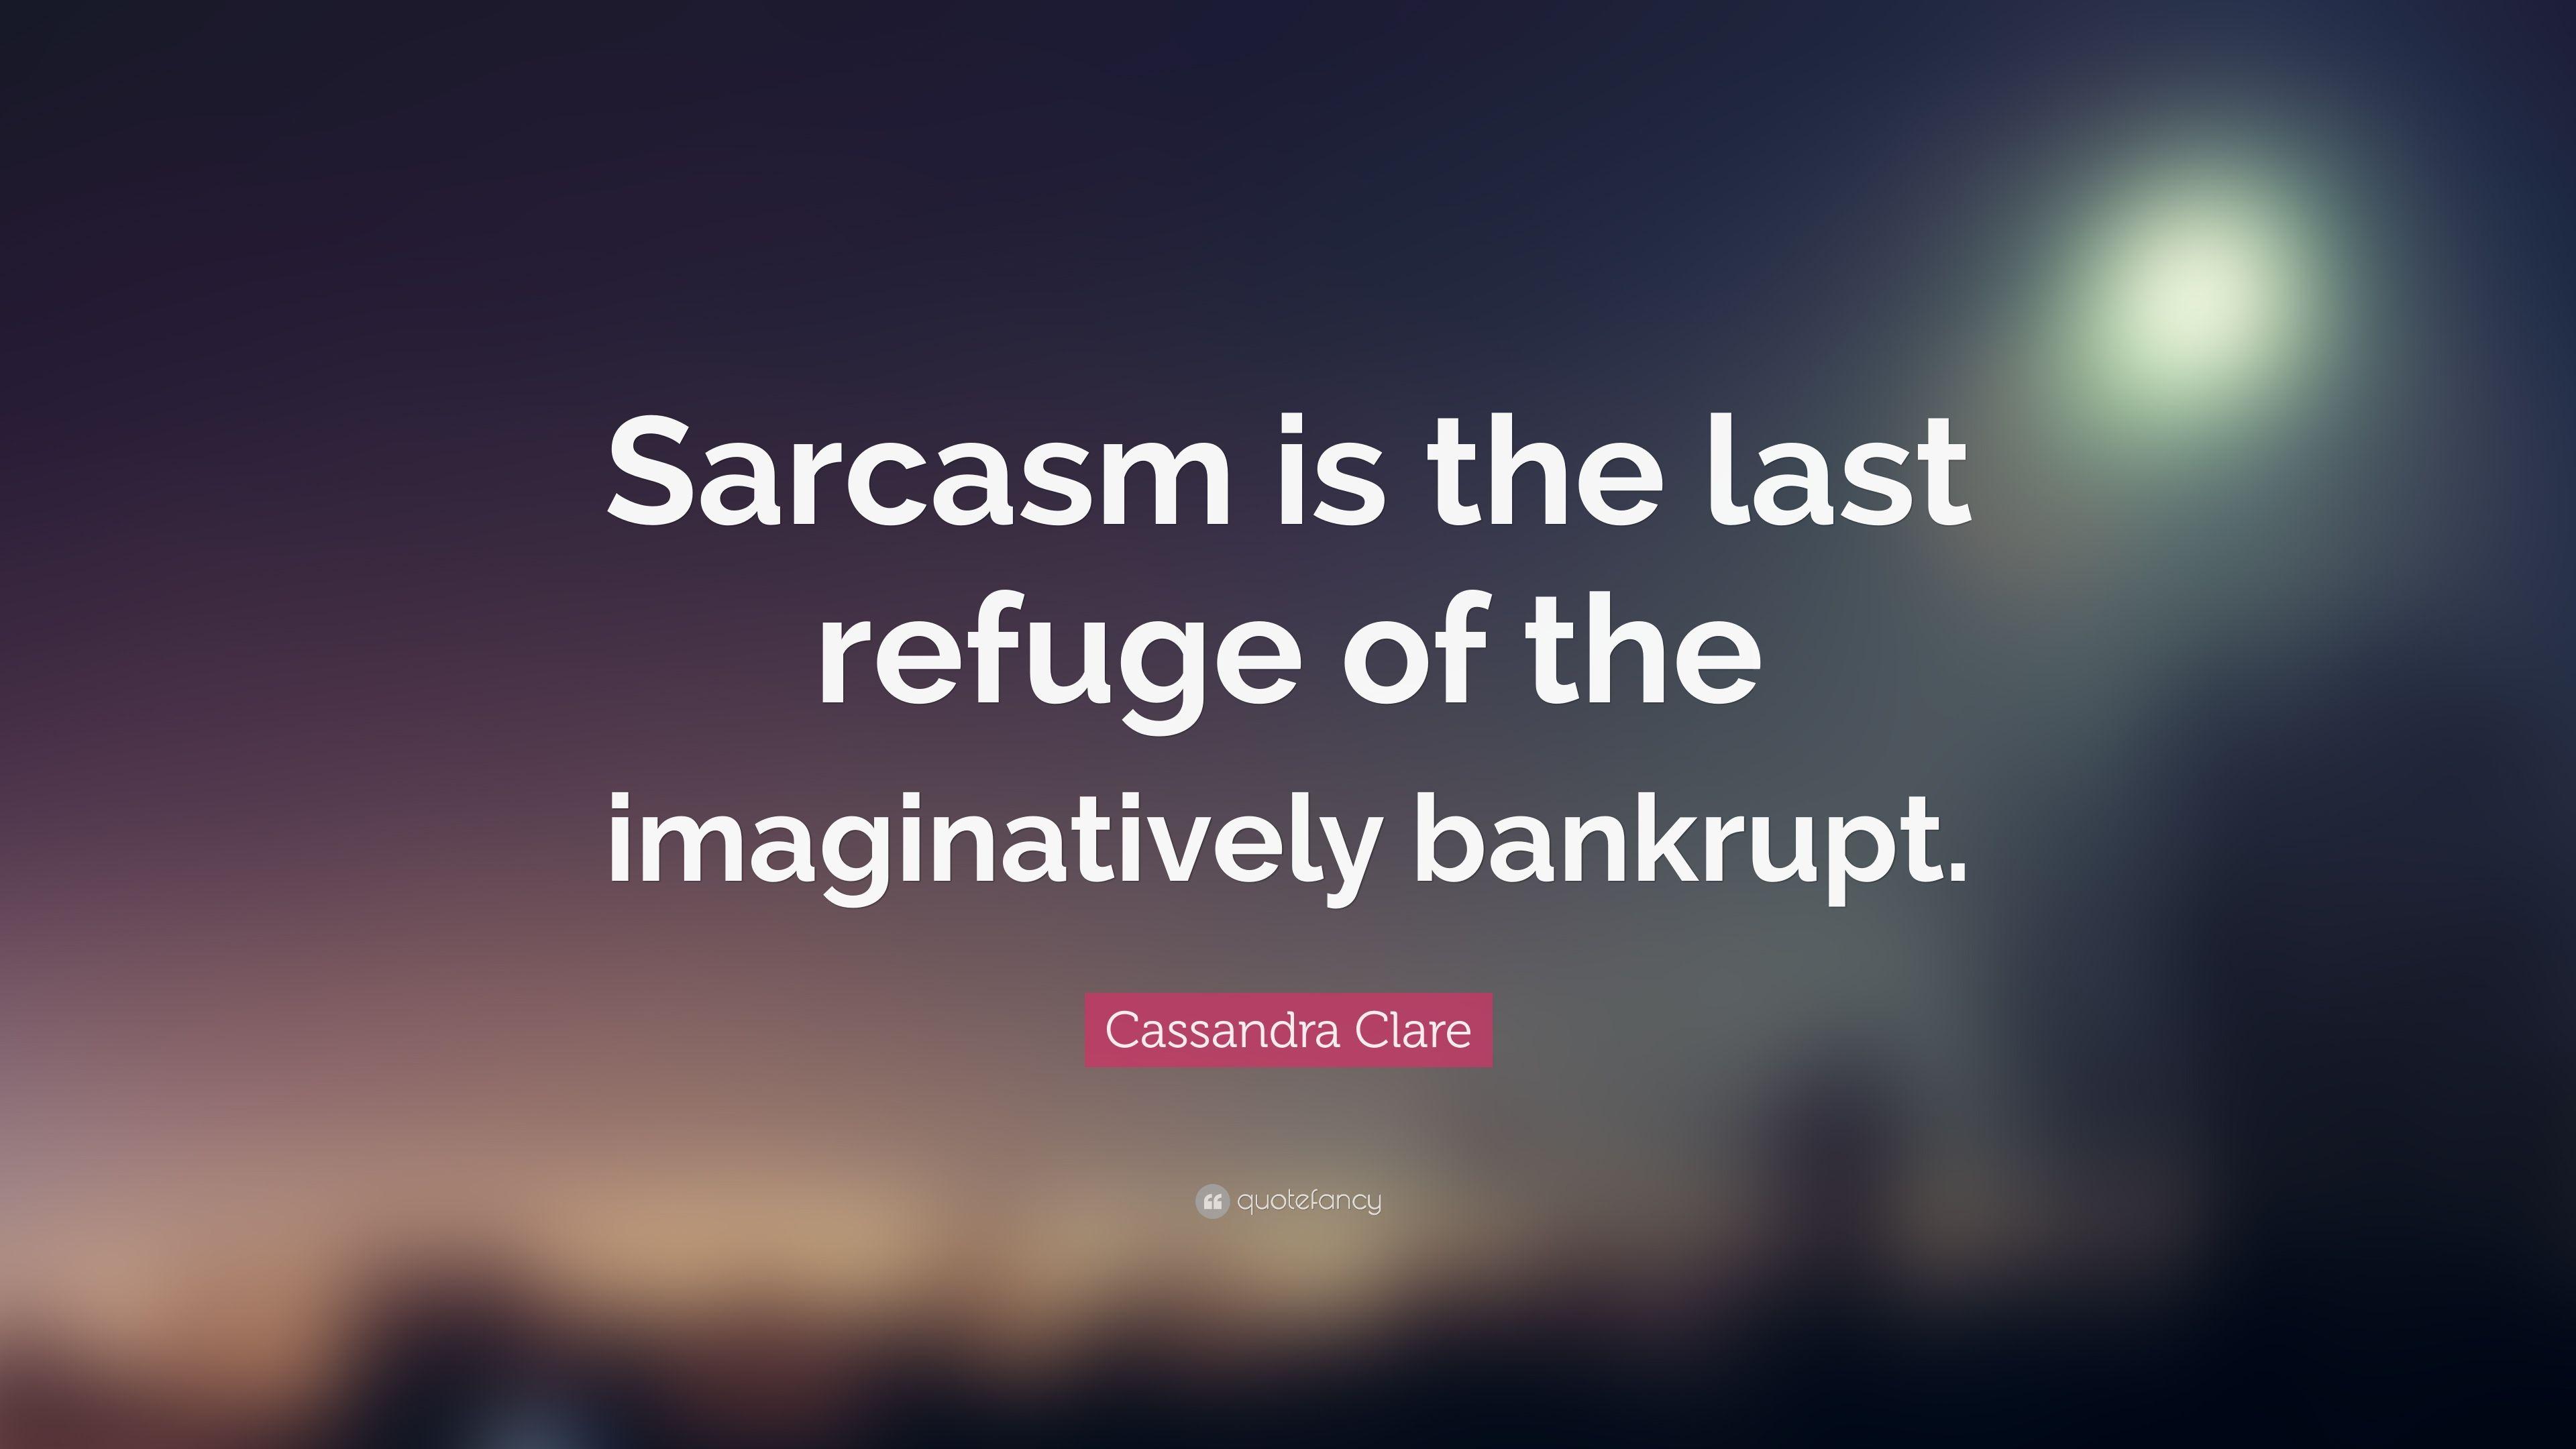 Cassandra Clare Quote: “Sarcasm is the last refuge